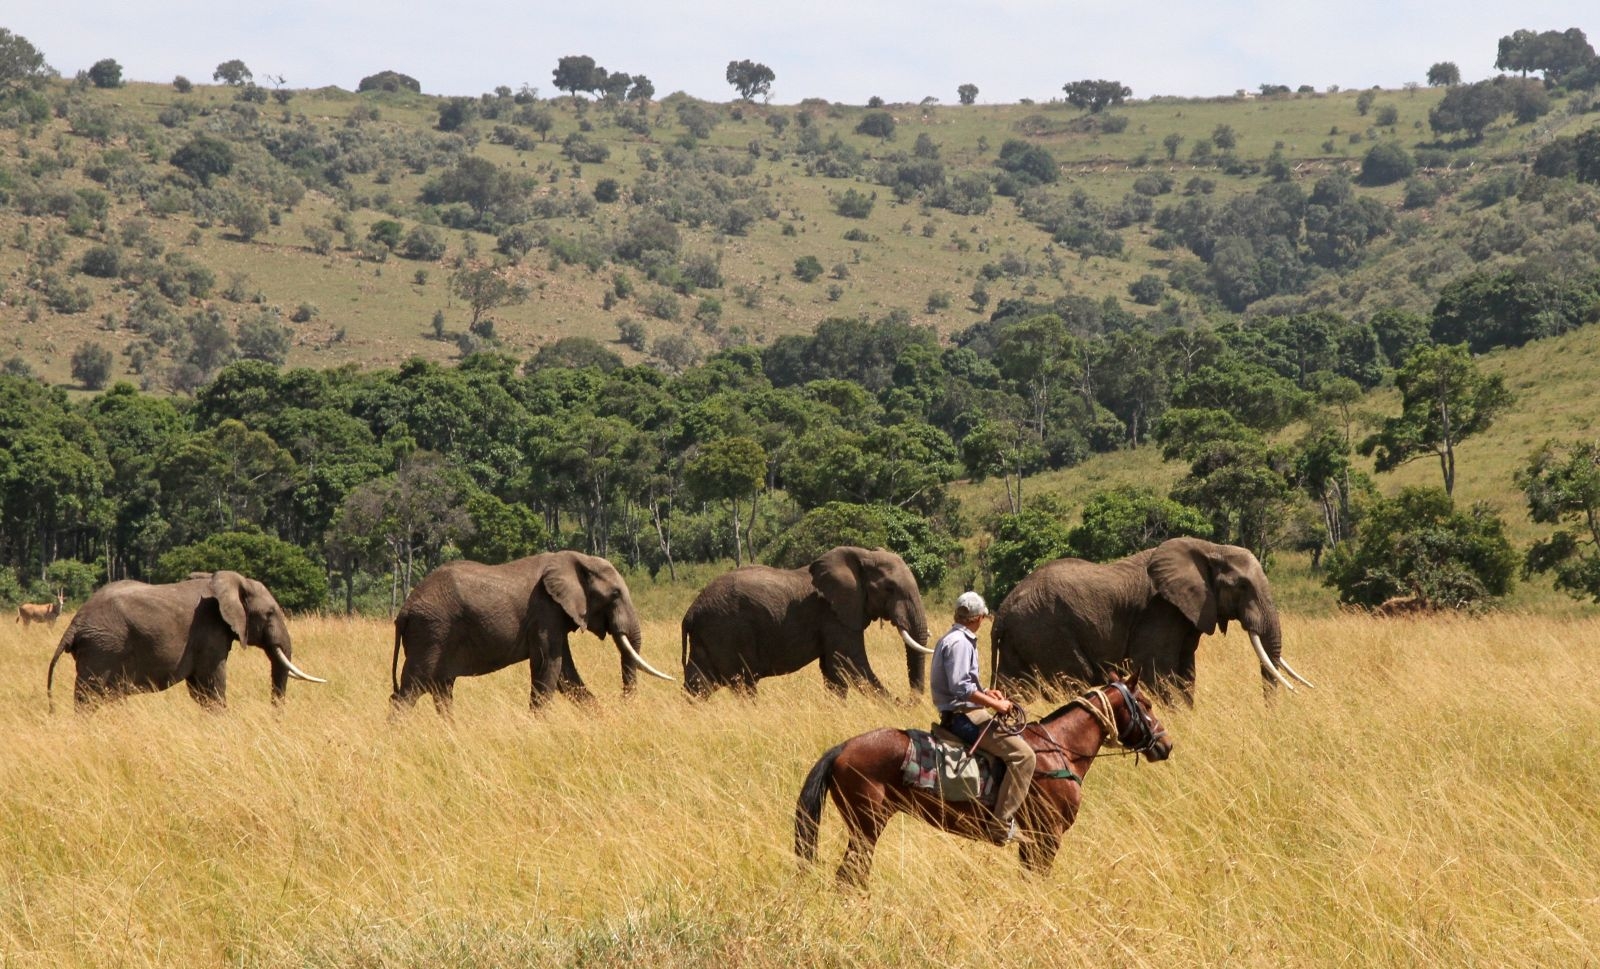 Man riding horse with elephants in Masai Mara in Kenya